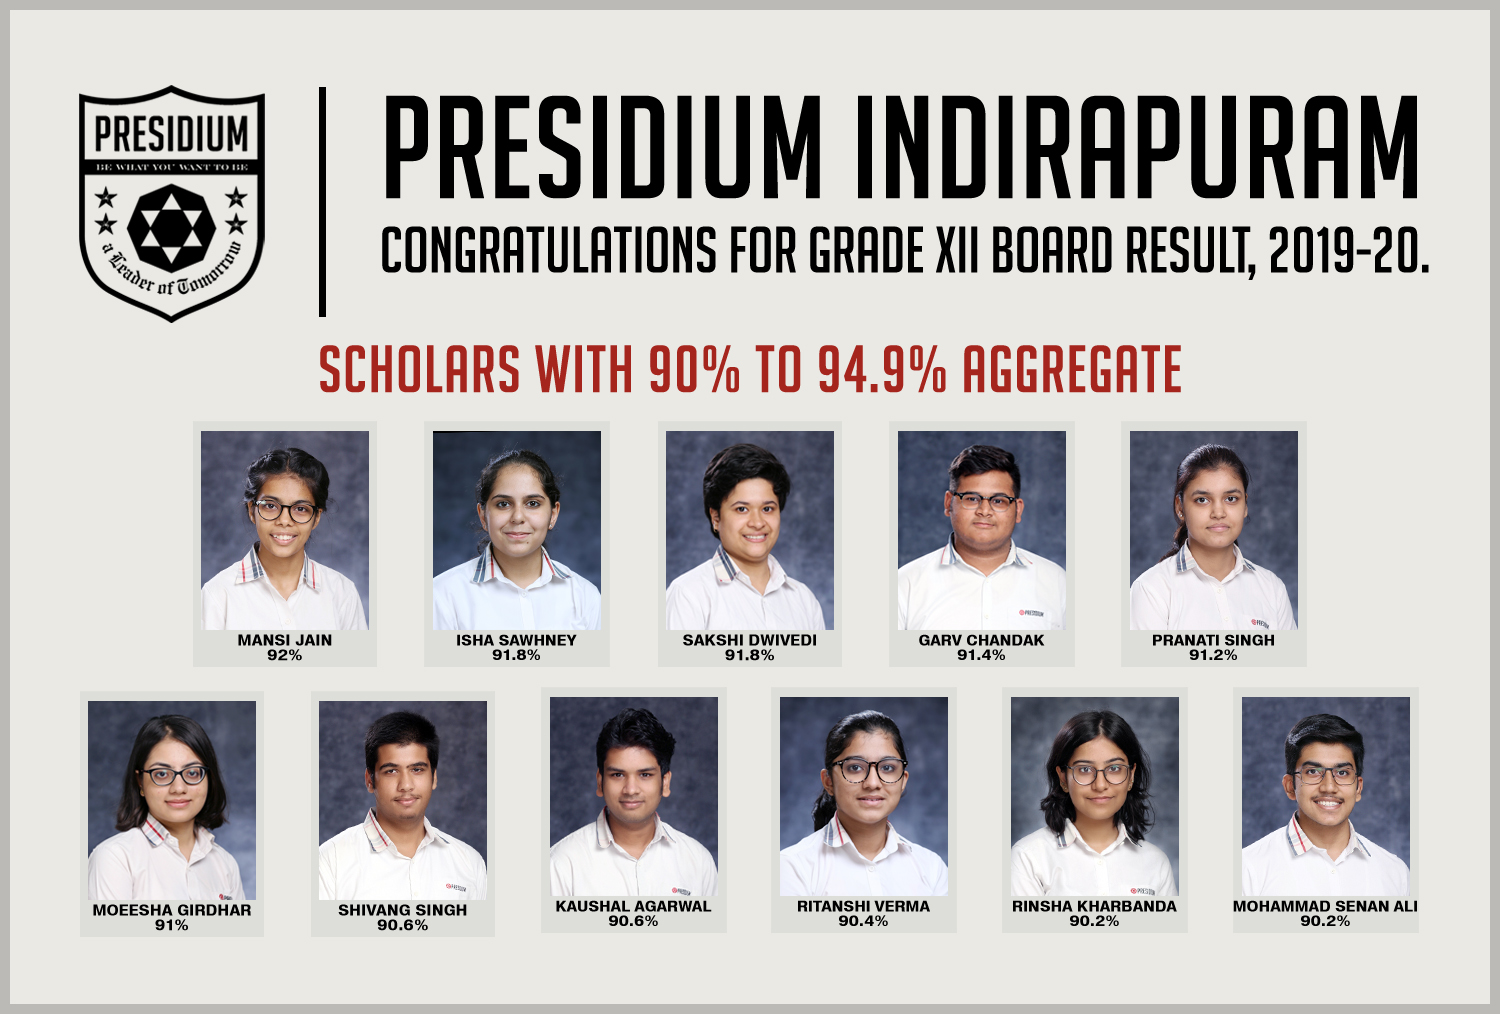 Presidium Indirapuram, PRESIDIANS OF CLASS 12TH DELIVER OUTSTANDING RESULTS IN BOARDS!